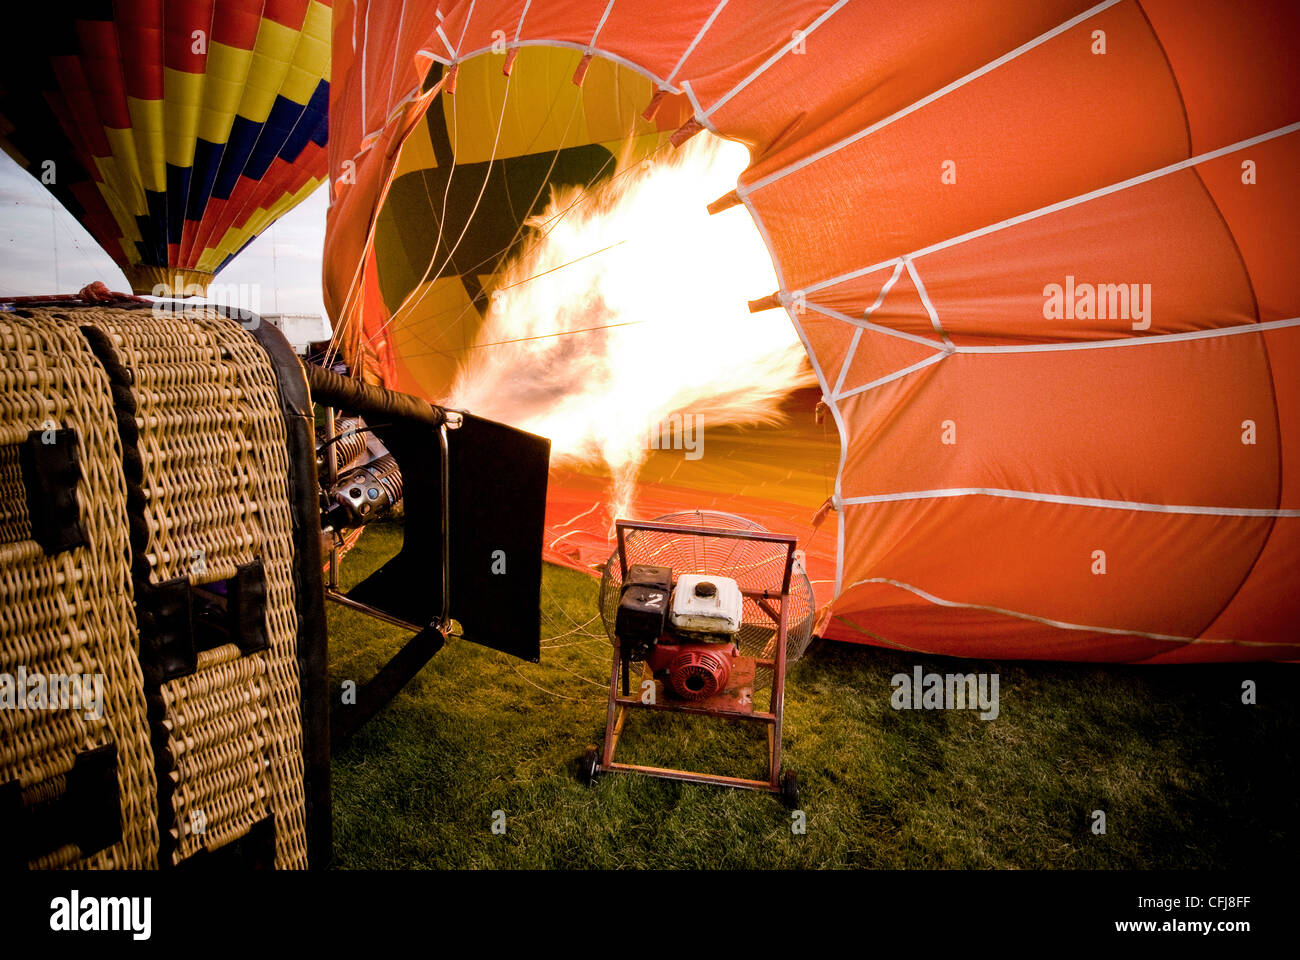 Airing up a hot air balloon Stock Photo